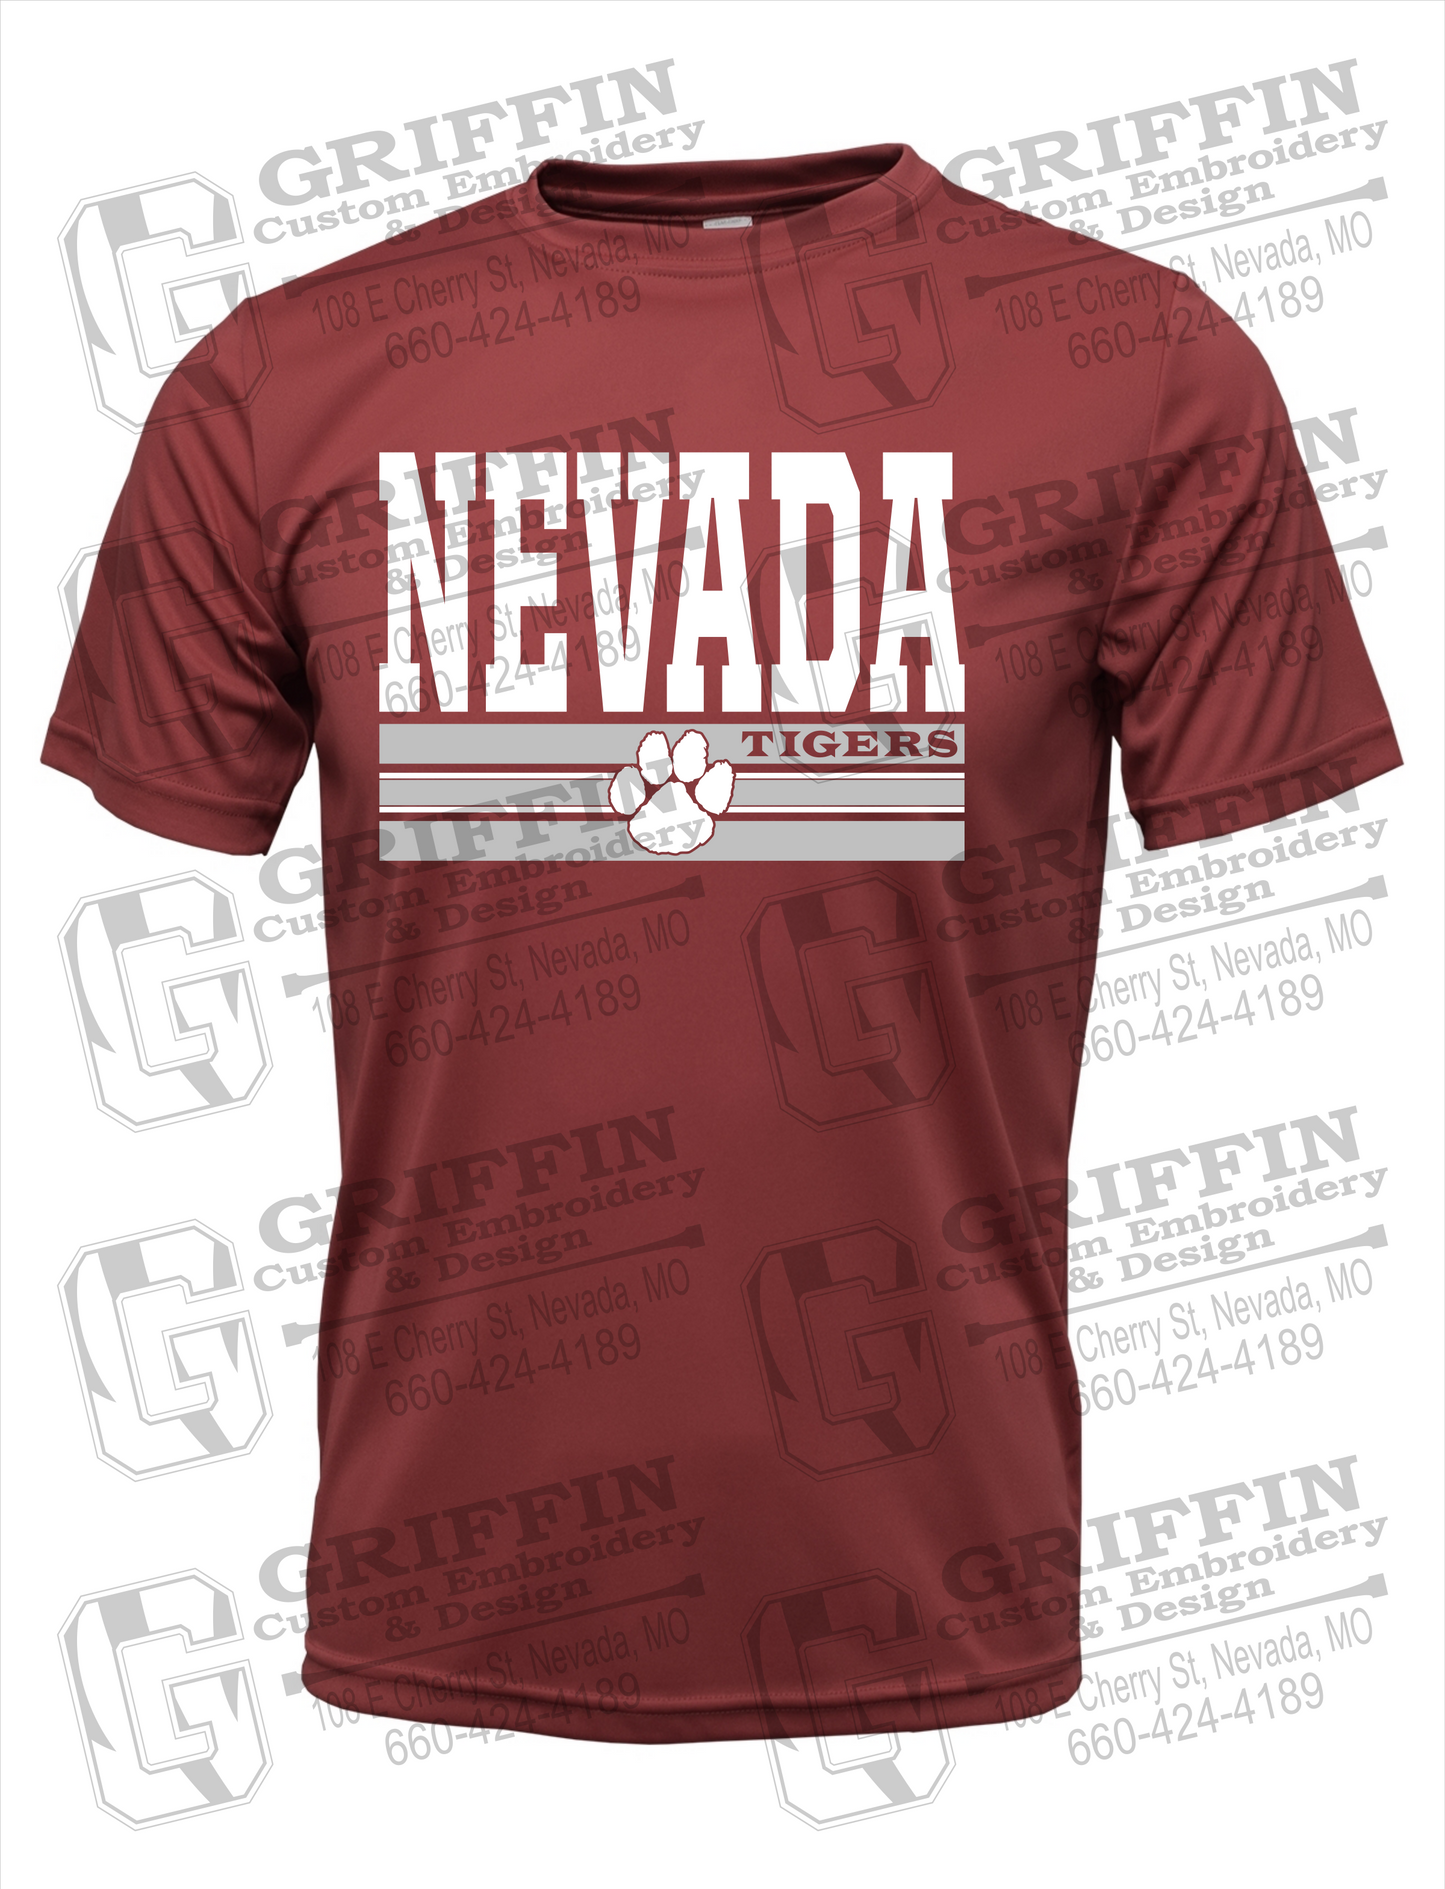 Nevada Tigers 22-V Dry-Fit T-Shirt